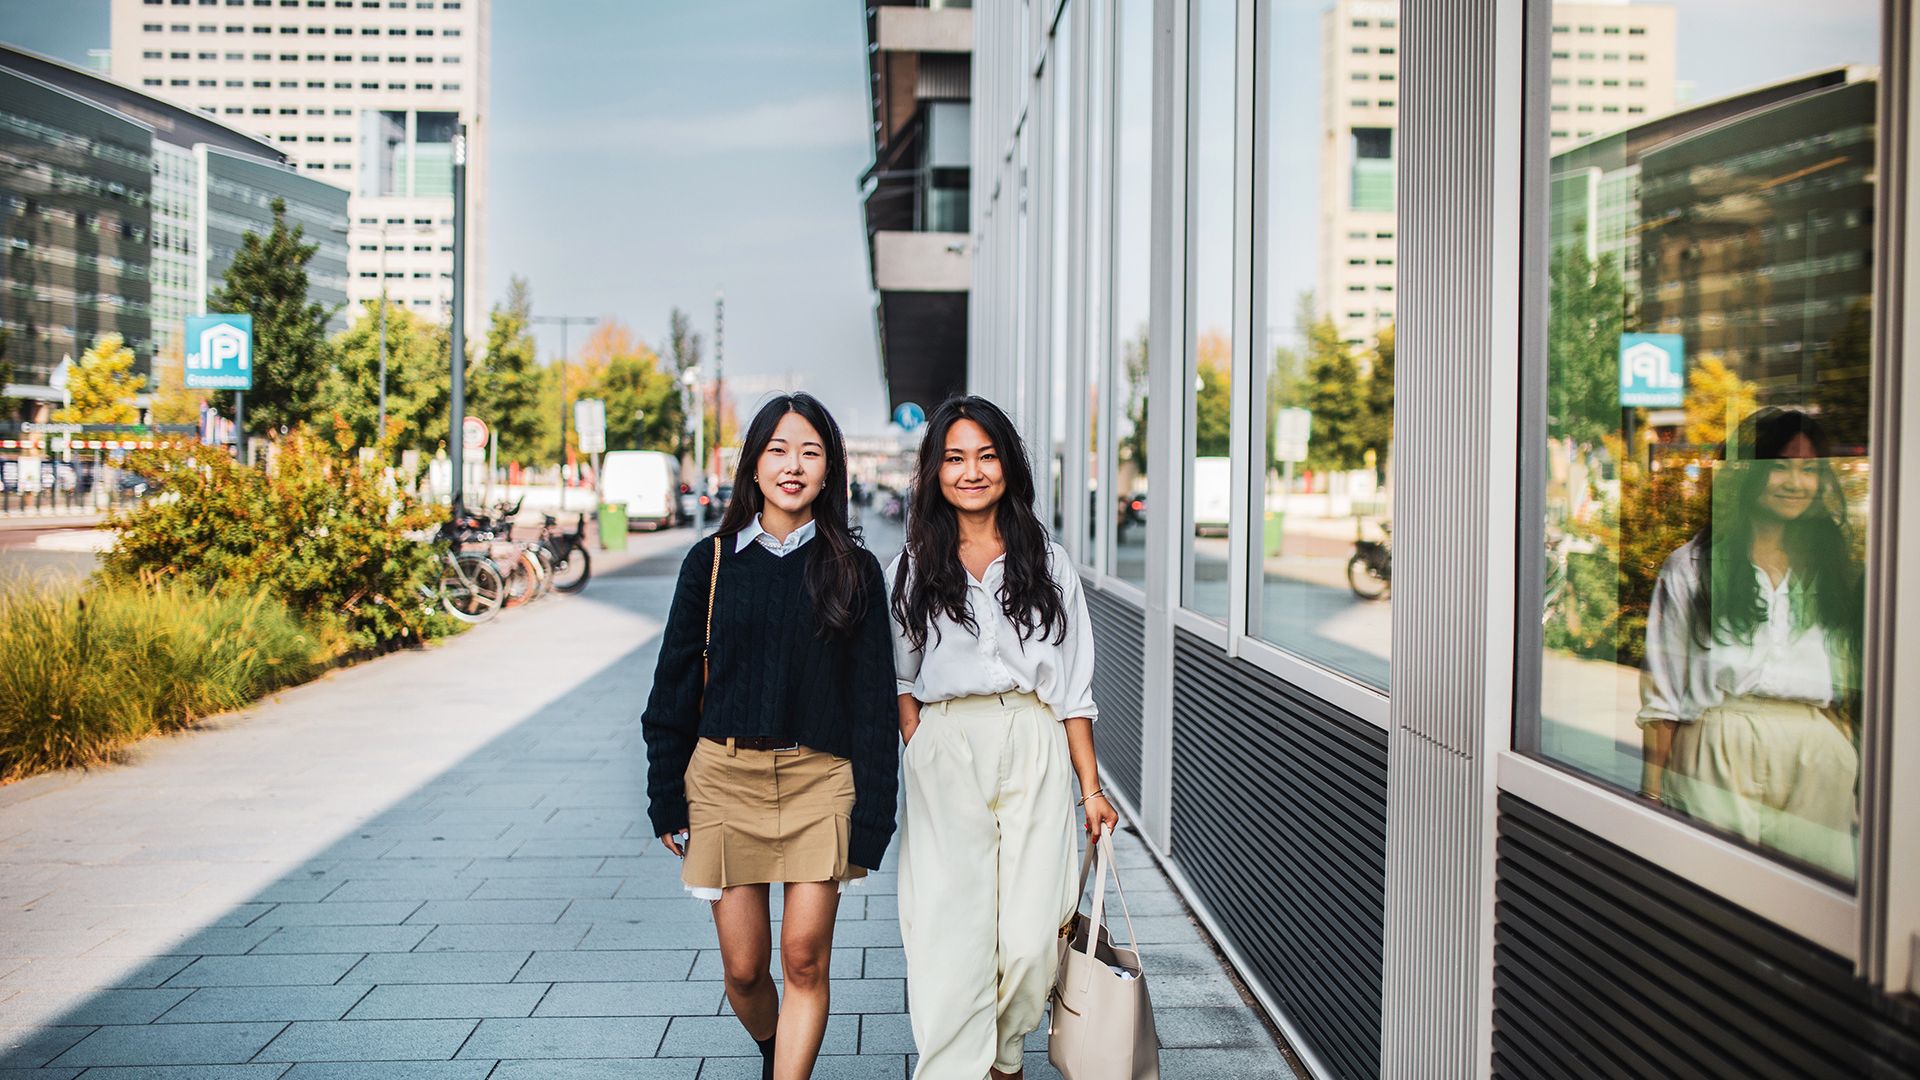 Julia Lam en Yoorim Lhim walking on the street